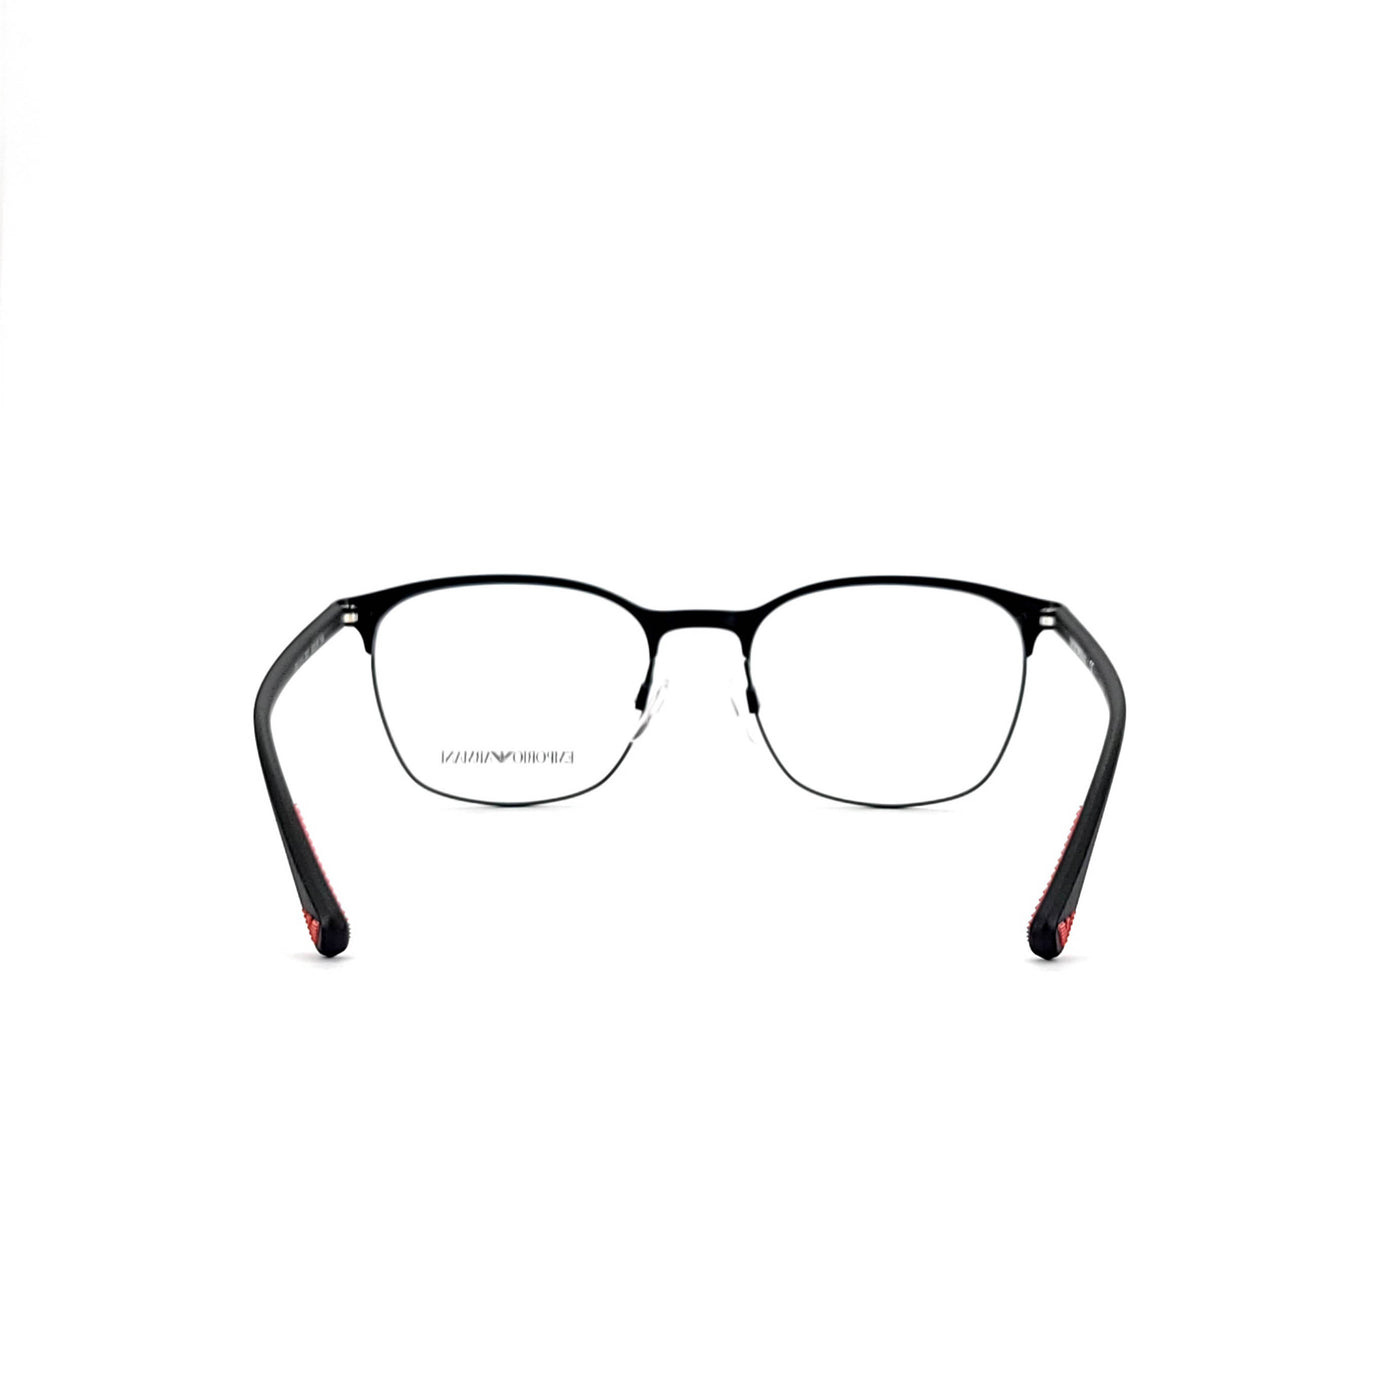 Emporio Armani EA1114/3001 | Eyeglasses - Vision Express Optical Philippines